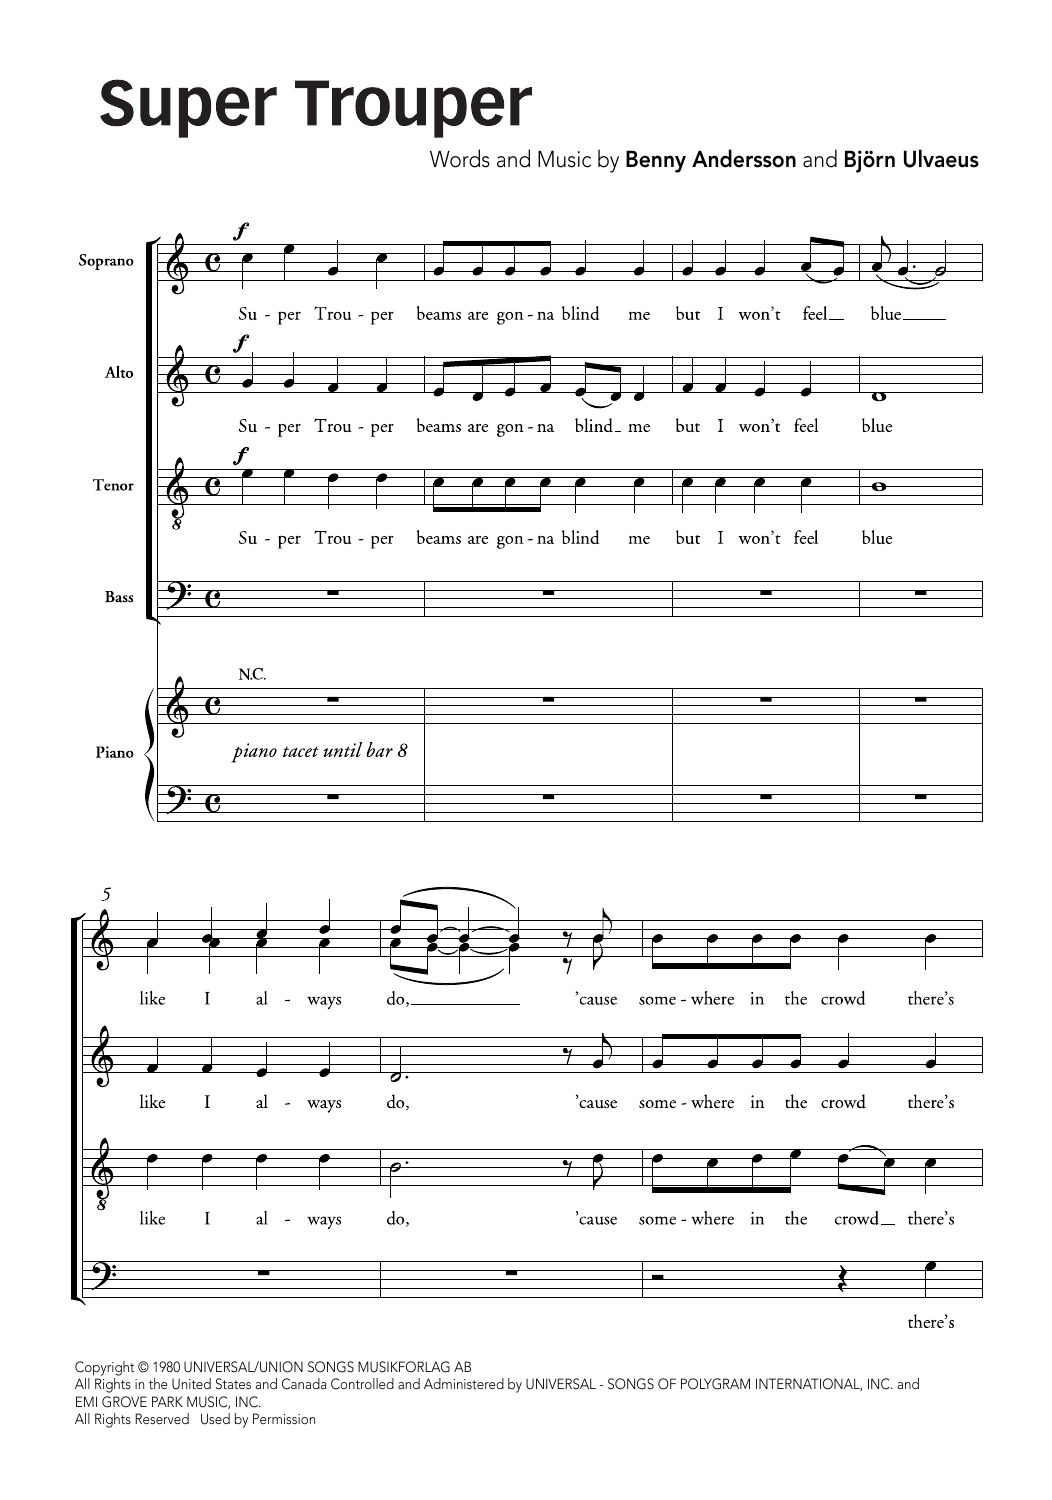 ABBA Super Trouper (arr. Ralph Allwood & Lora Sansun) Sheet Music Notes & Chords for SATB Choir - Download or Print PDF